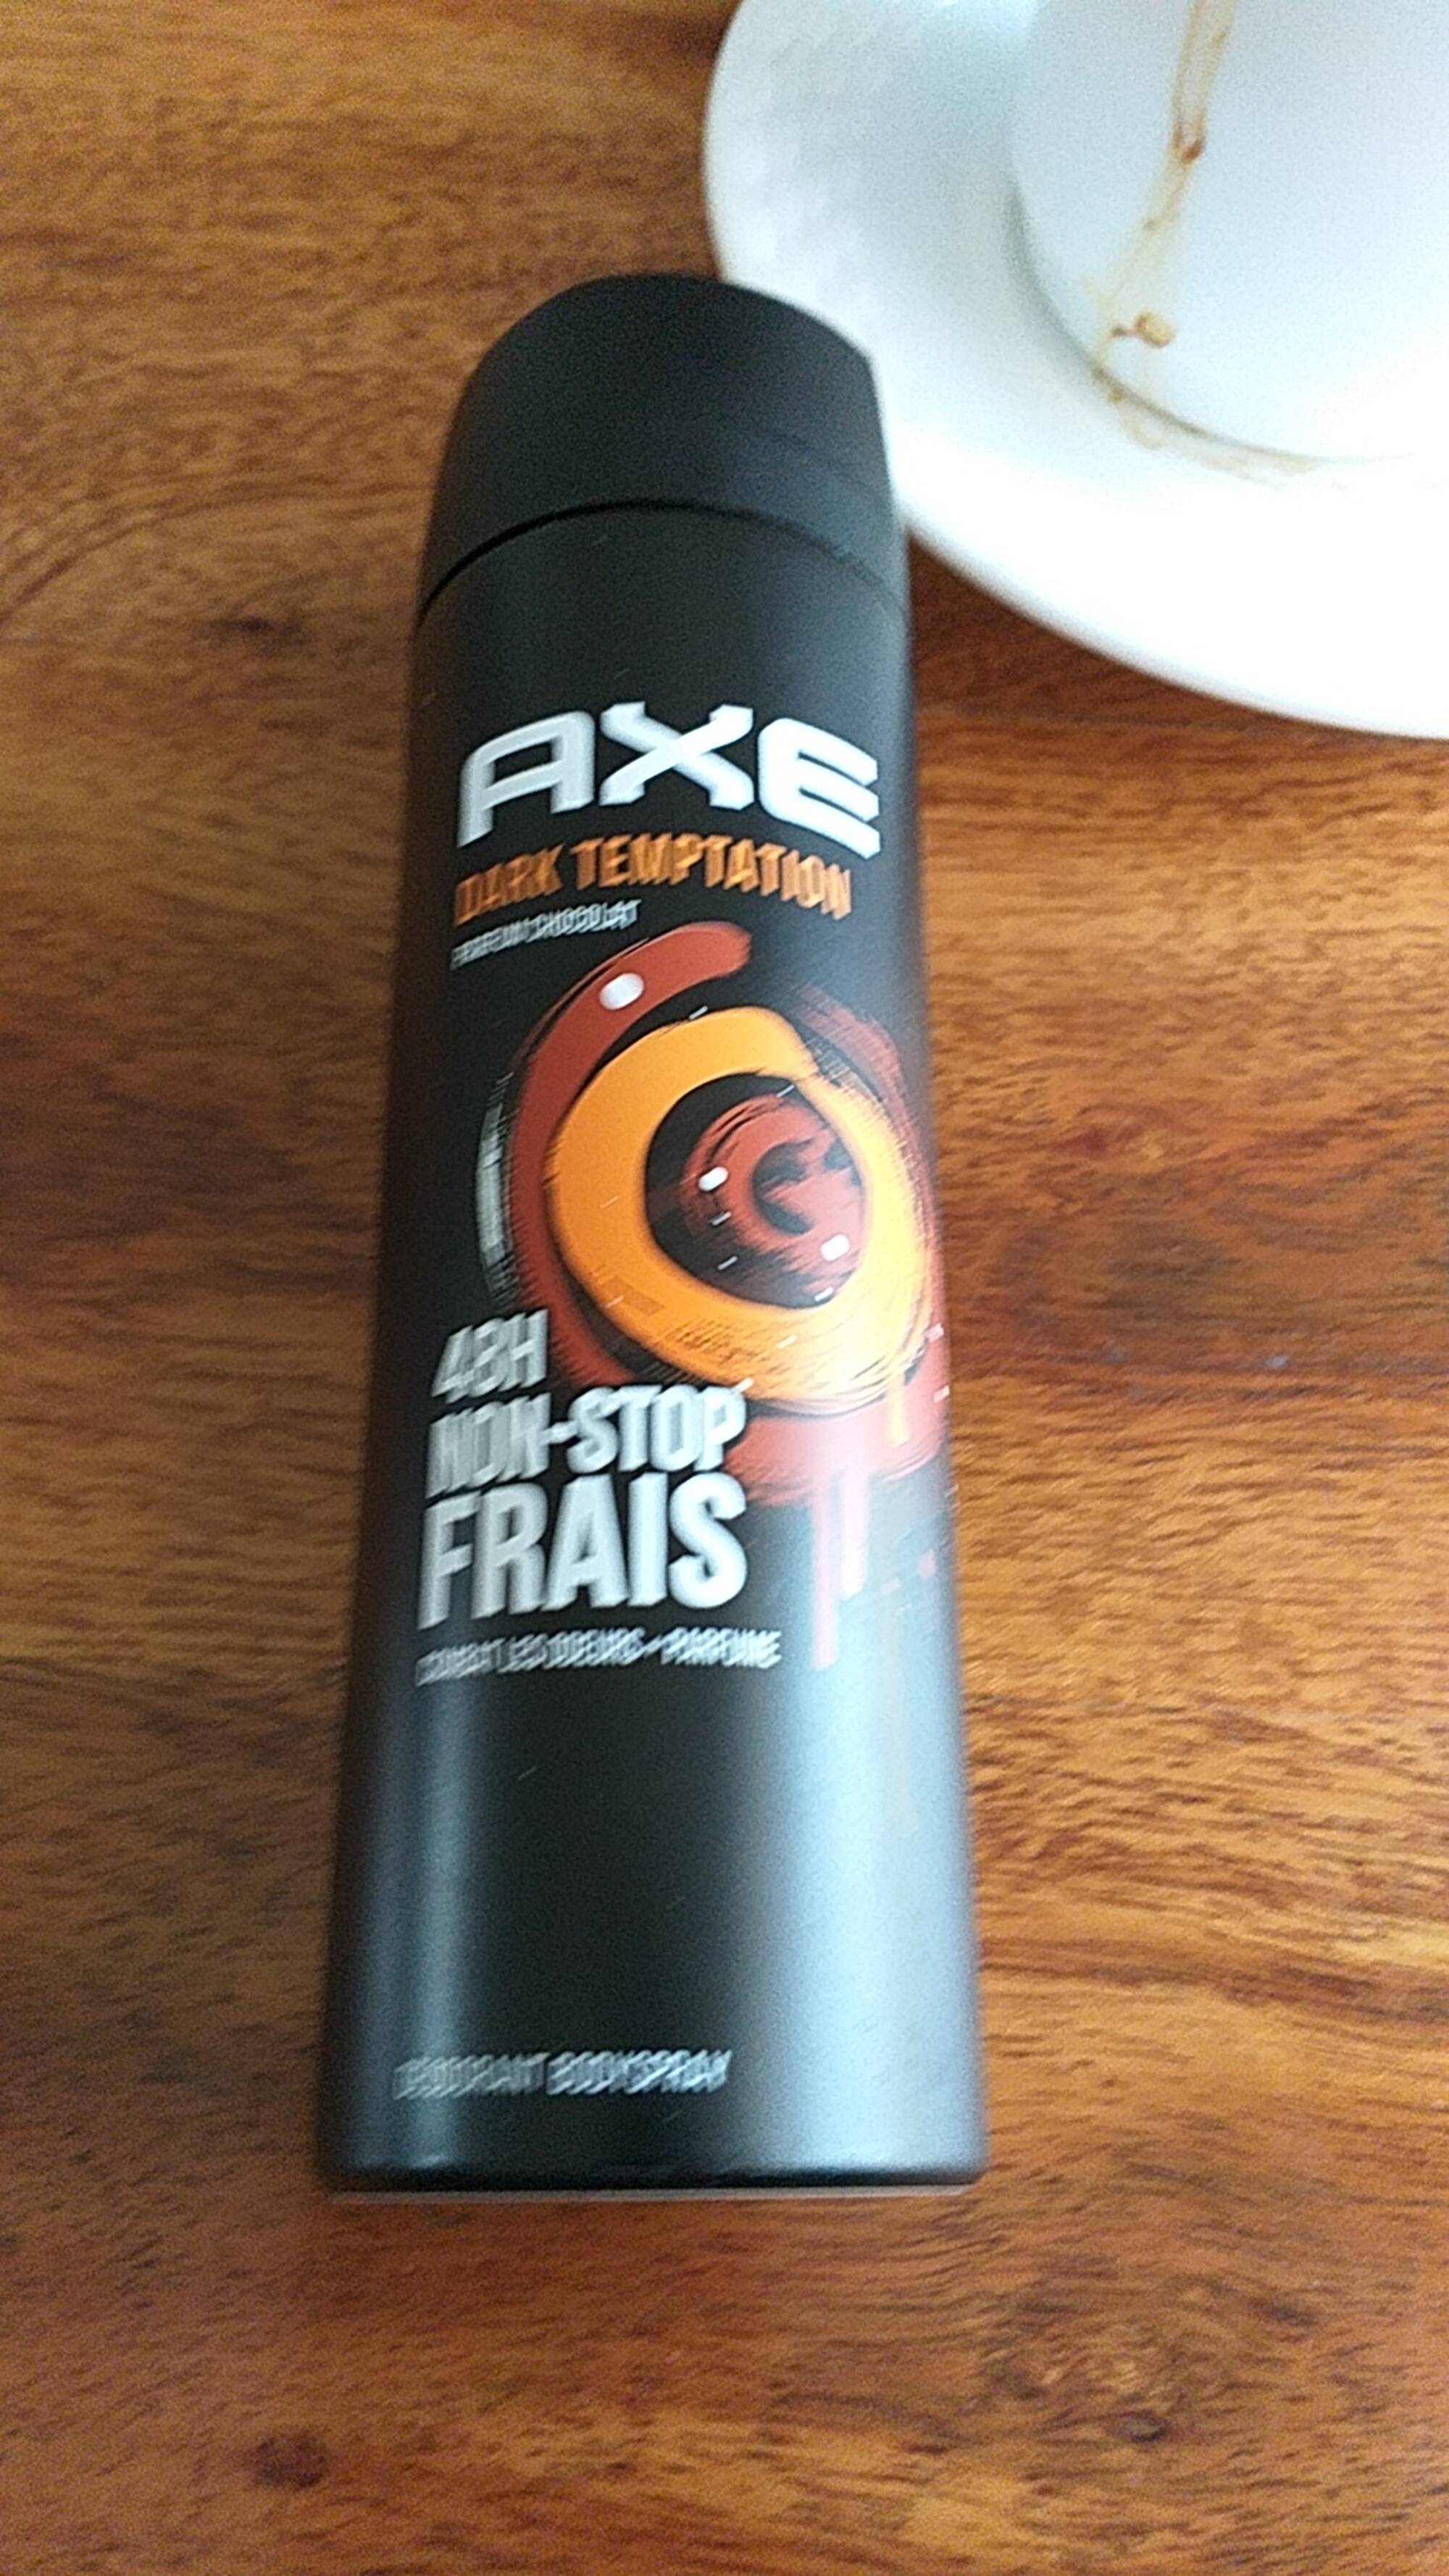 AXE - Dark temptation - Déodorant bodyspray 48h 